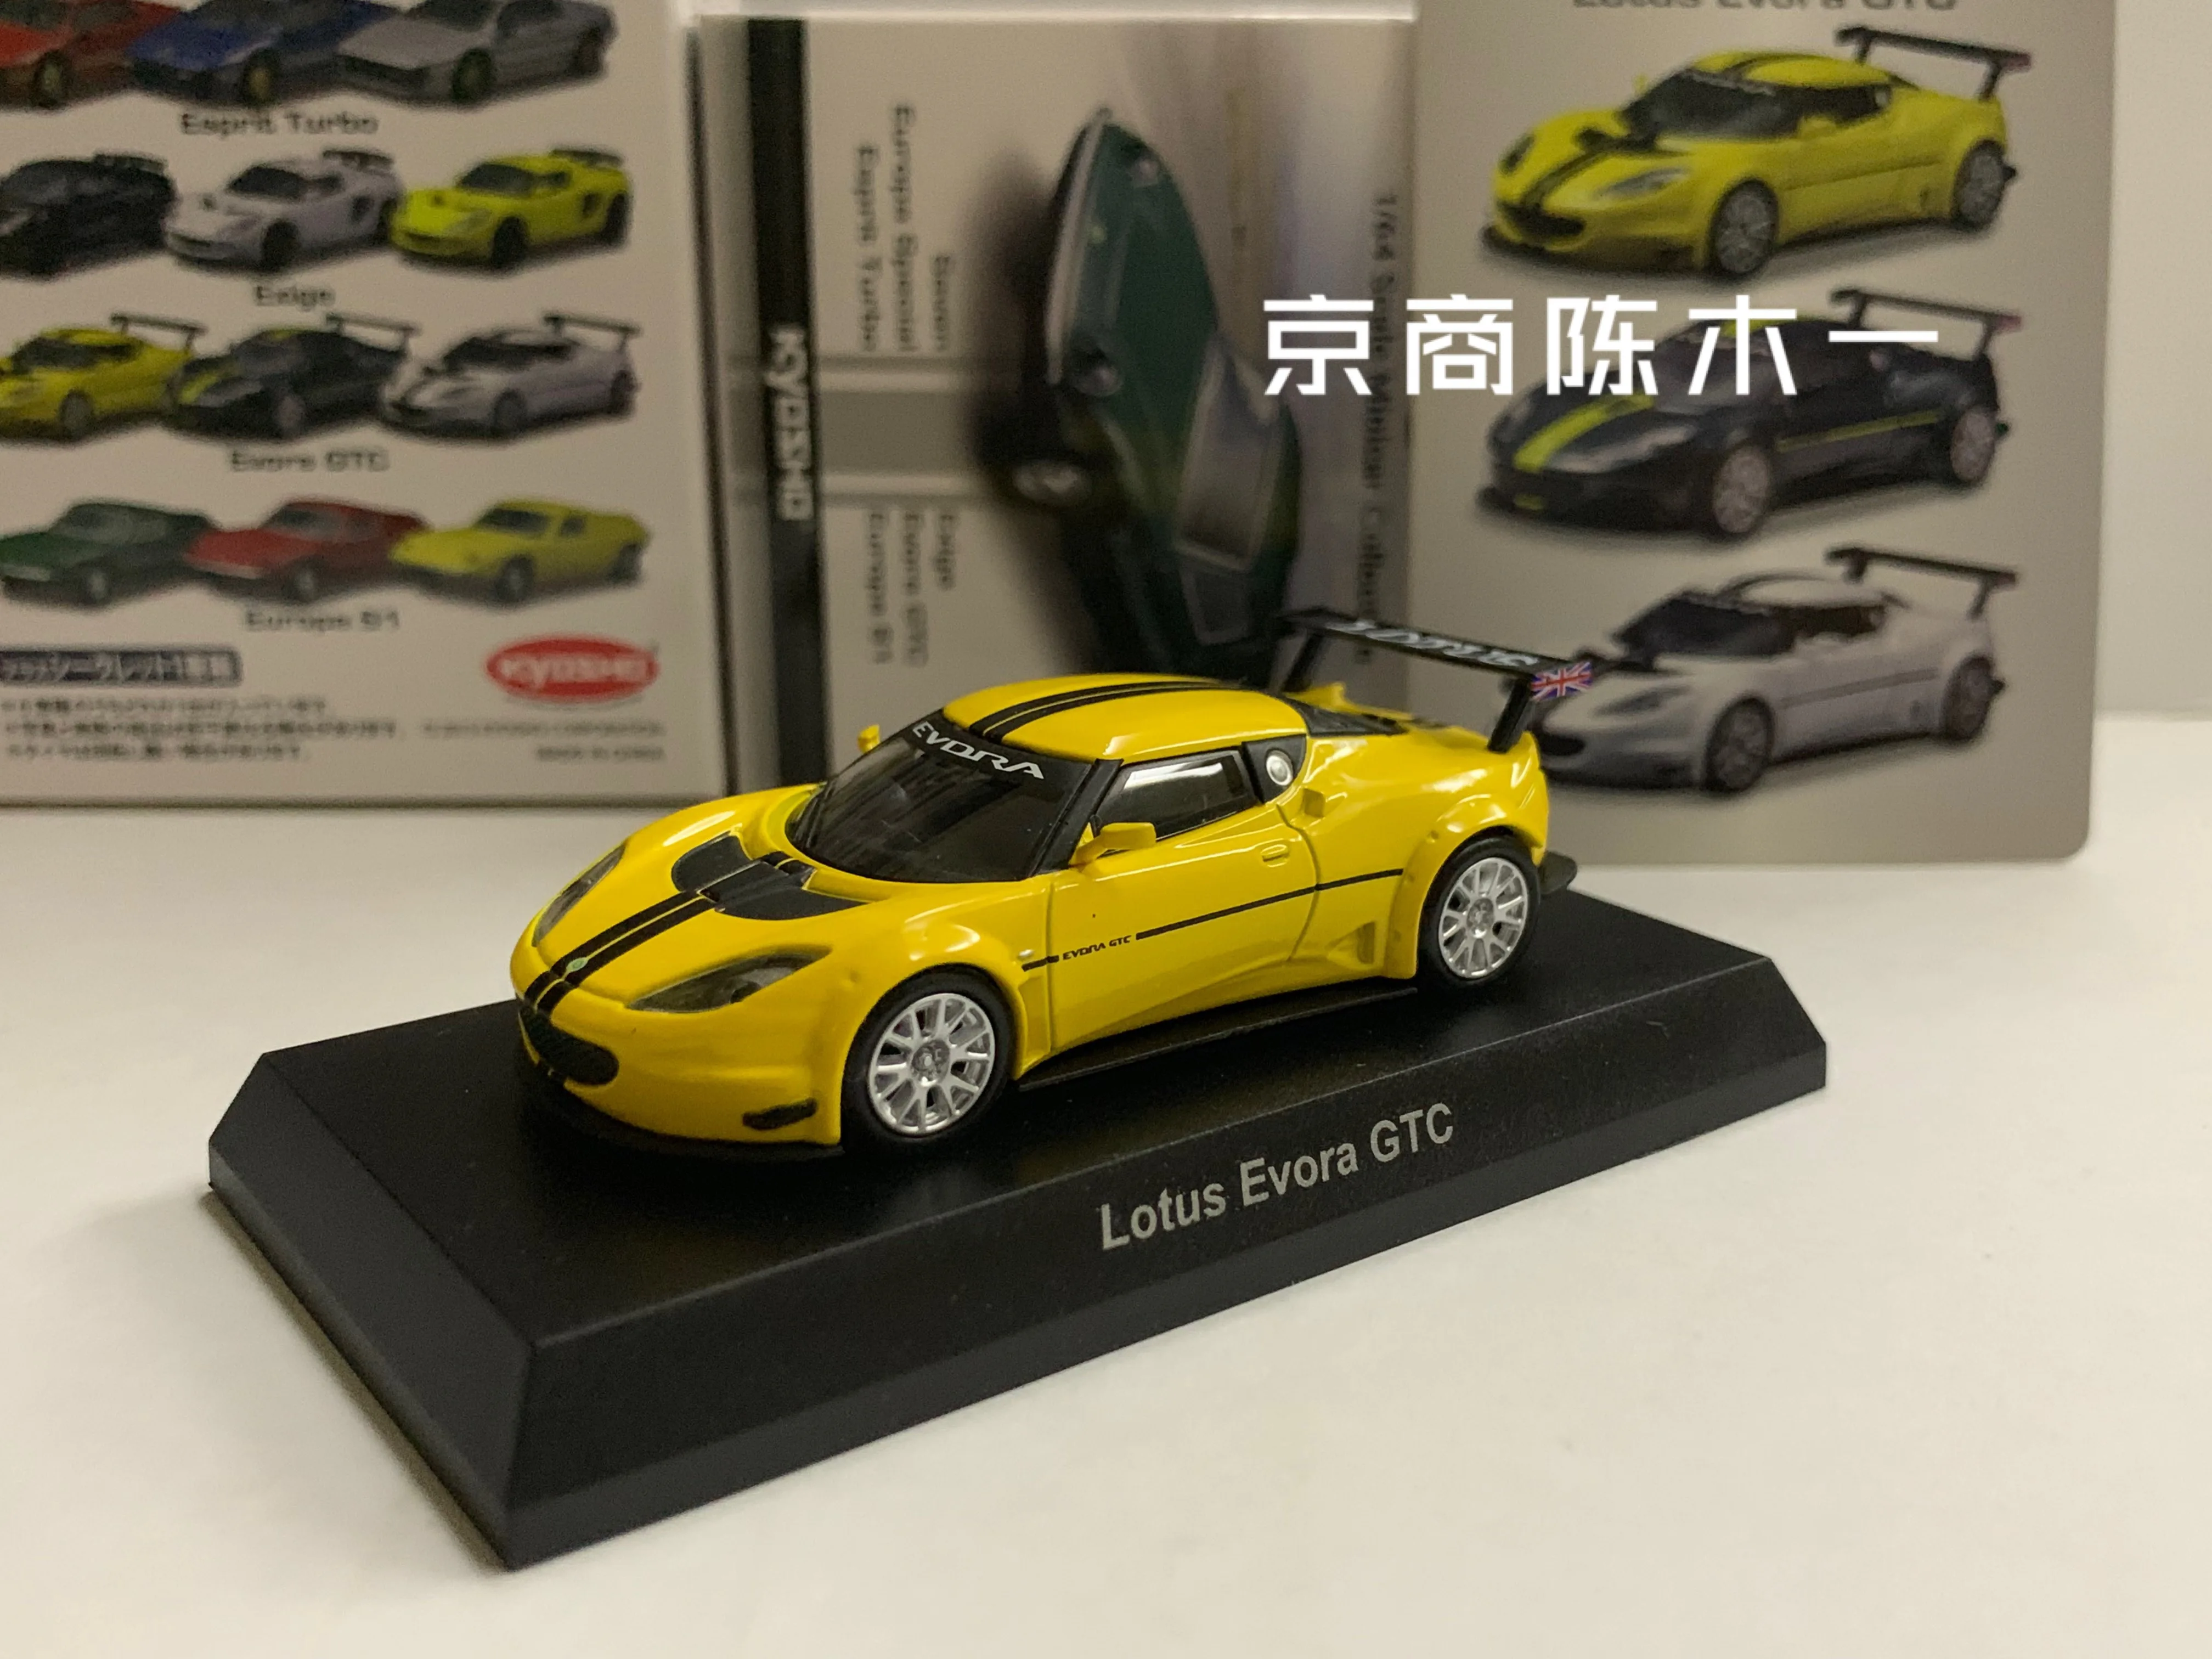 

1/64 KYOSHO Lotus Evora GTC Collection of die-cast alloy car decoration model toys